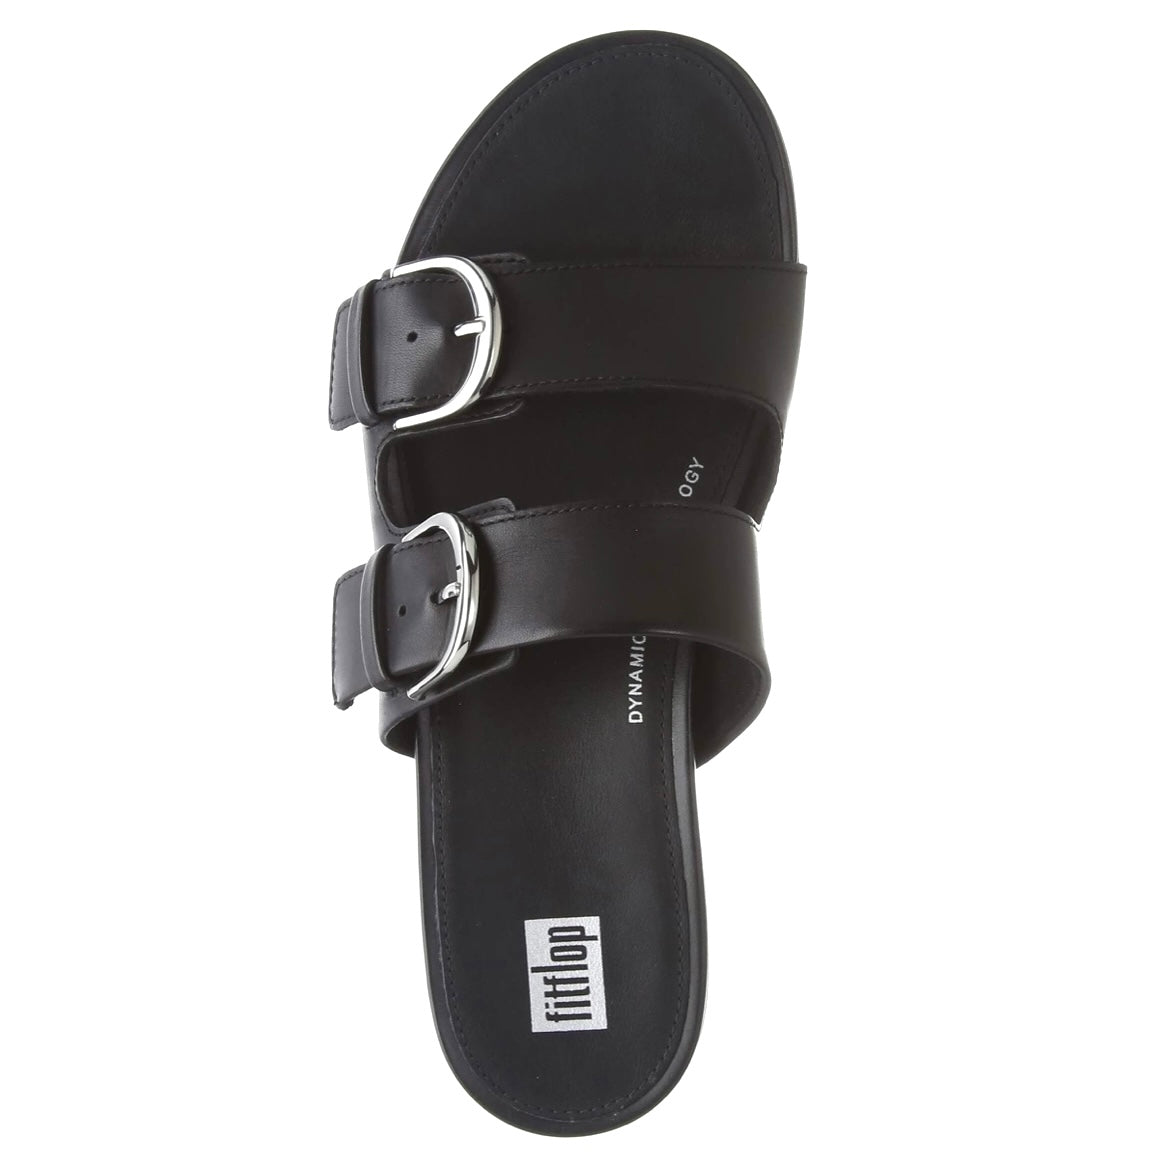 GRACCIE Women's Black Slide Sandals